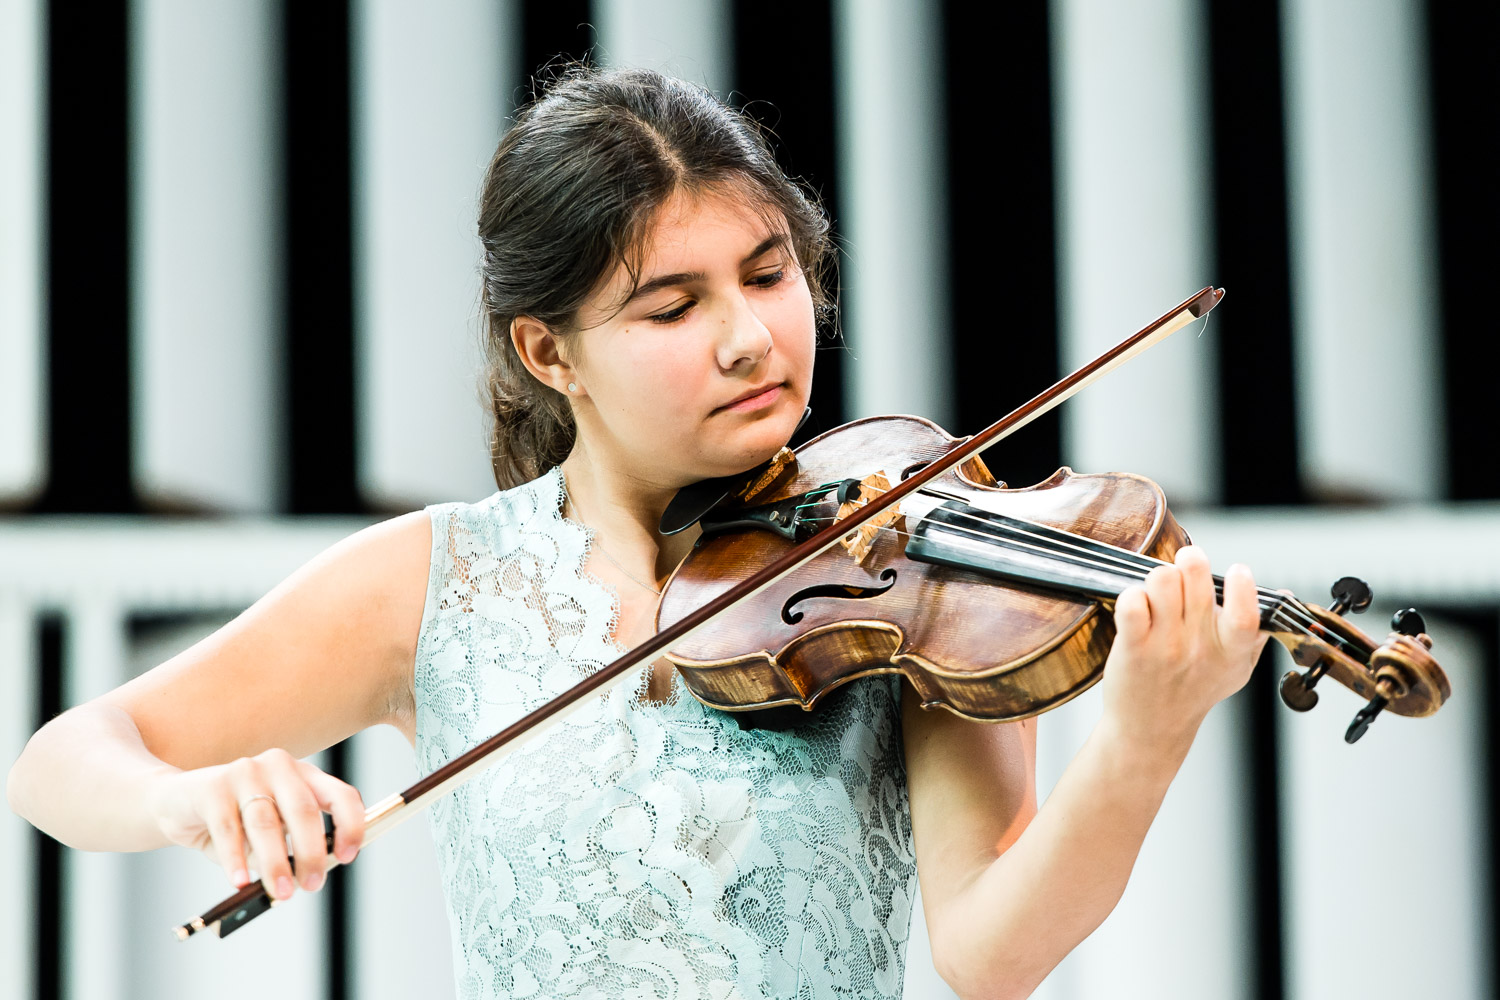 Princess Christina Classical Music Competition for ConcertLab